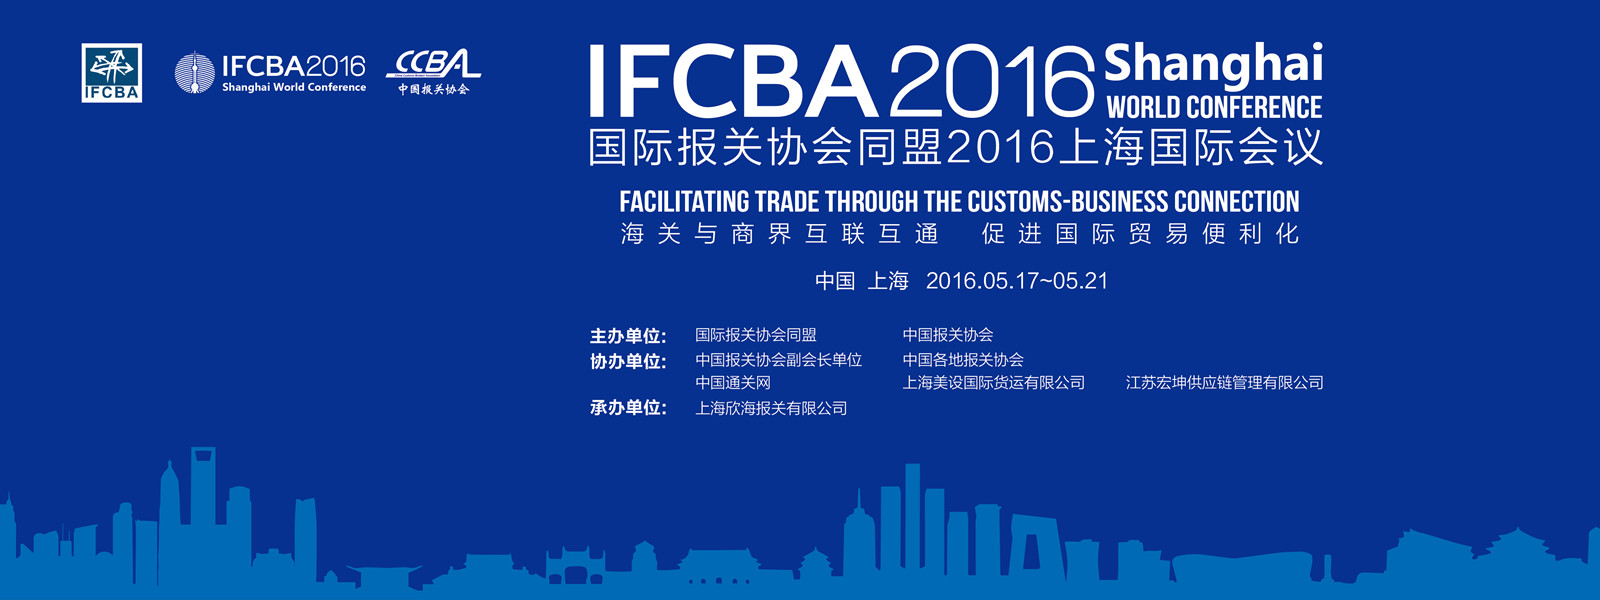 2016IFCBA花絮12—IFCBA2016上海国际会议前与IFCBA主席会面